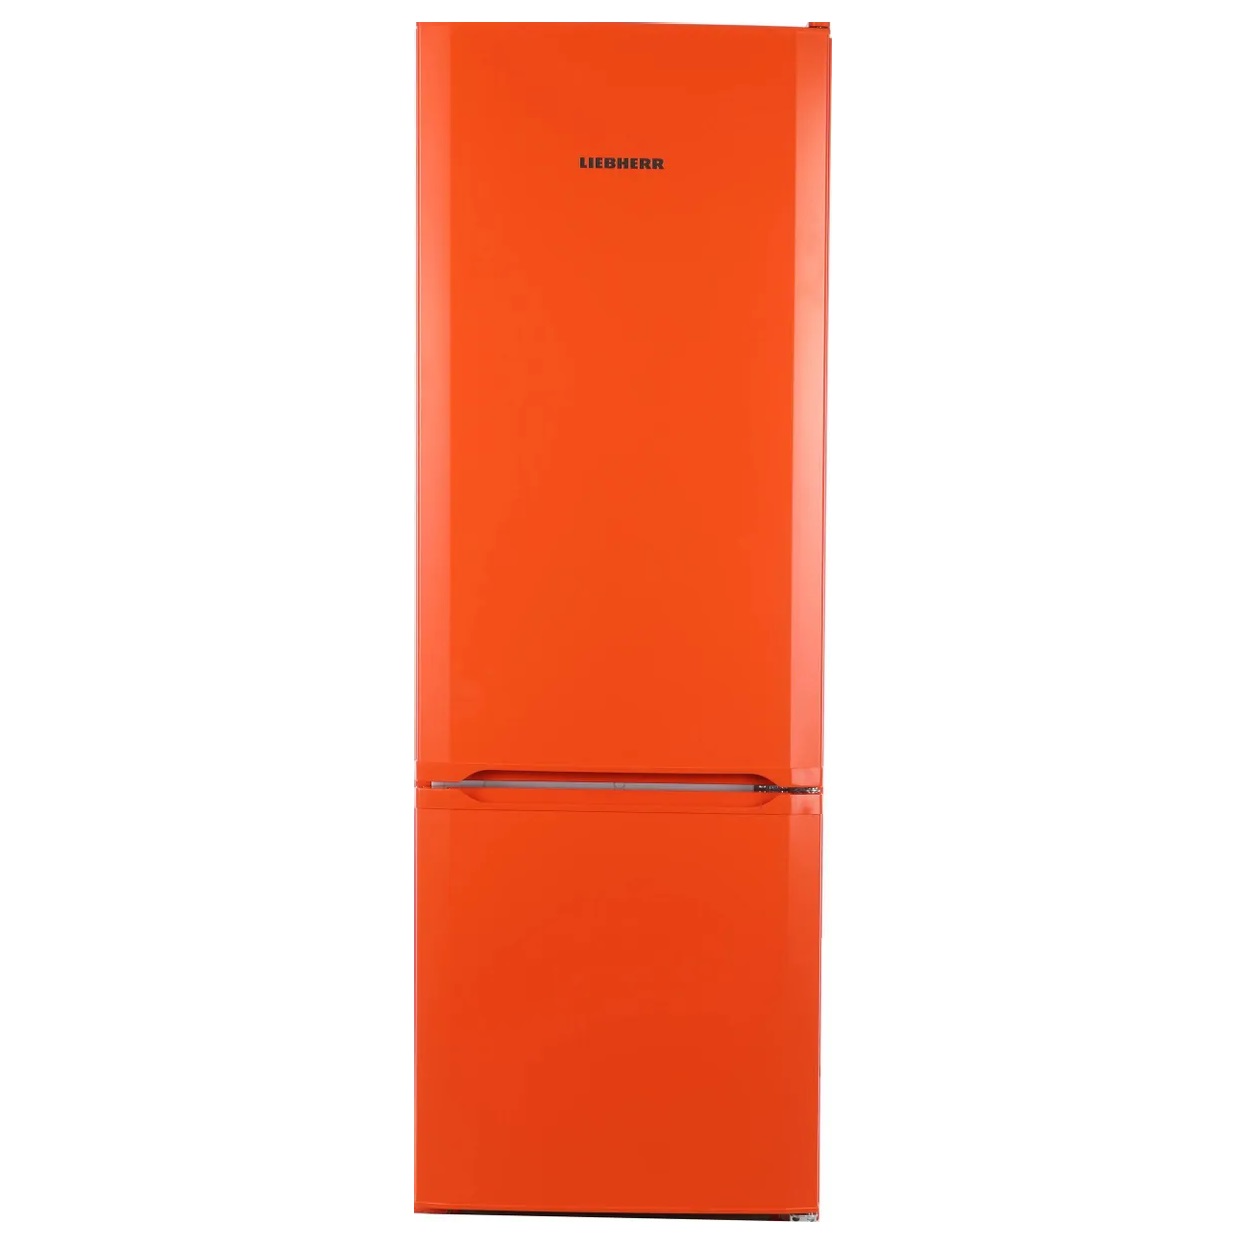 Холодильник LIEBHERR CUNO 2831-22 001 оранжевый двухкамерный холодильник liebherr cuno 2831 22 001 оранжевый